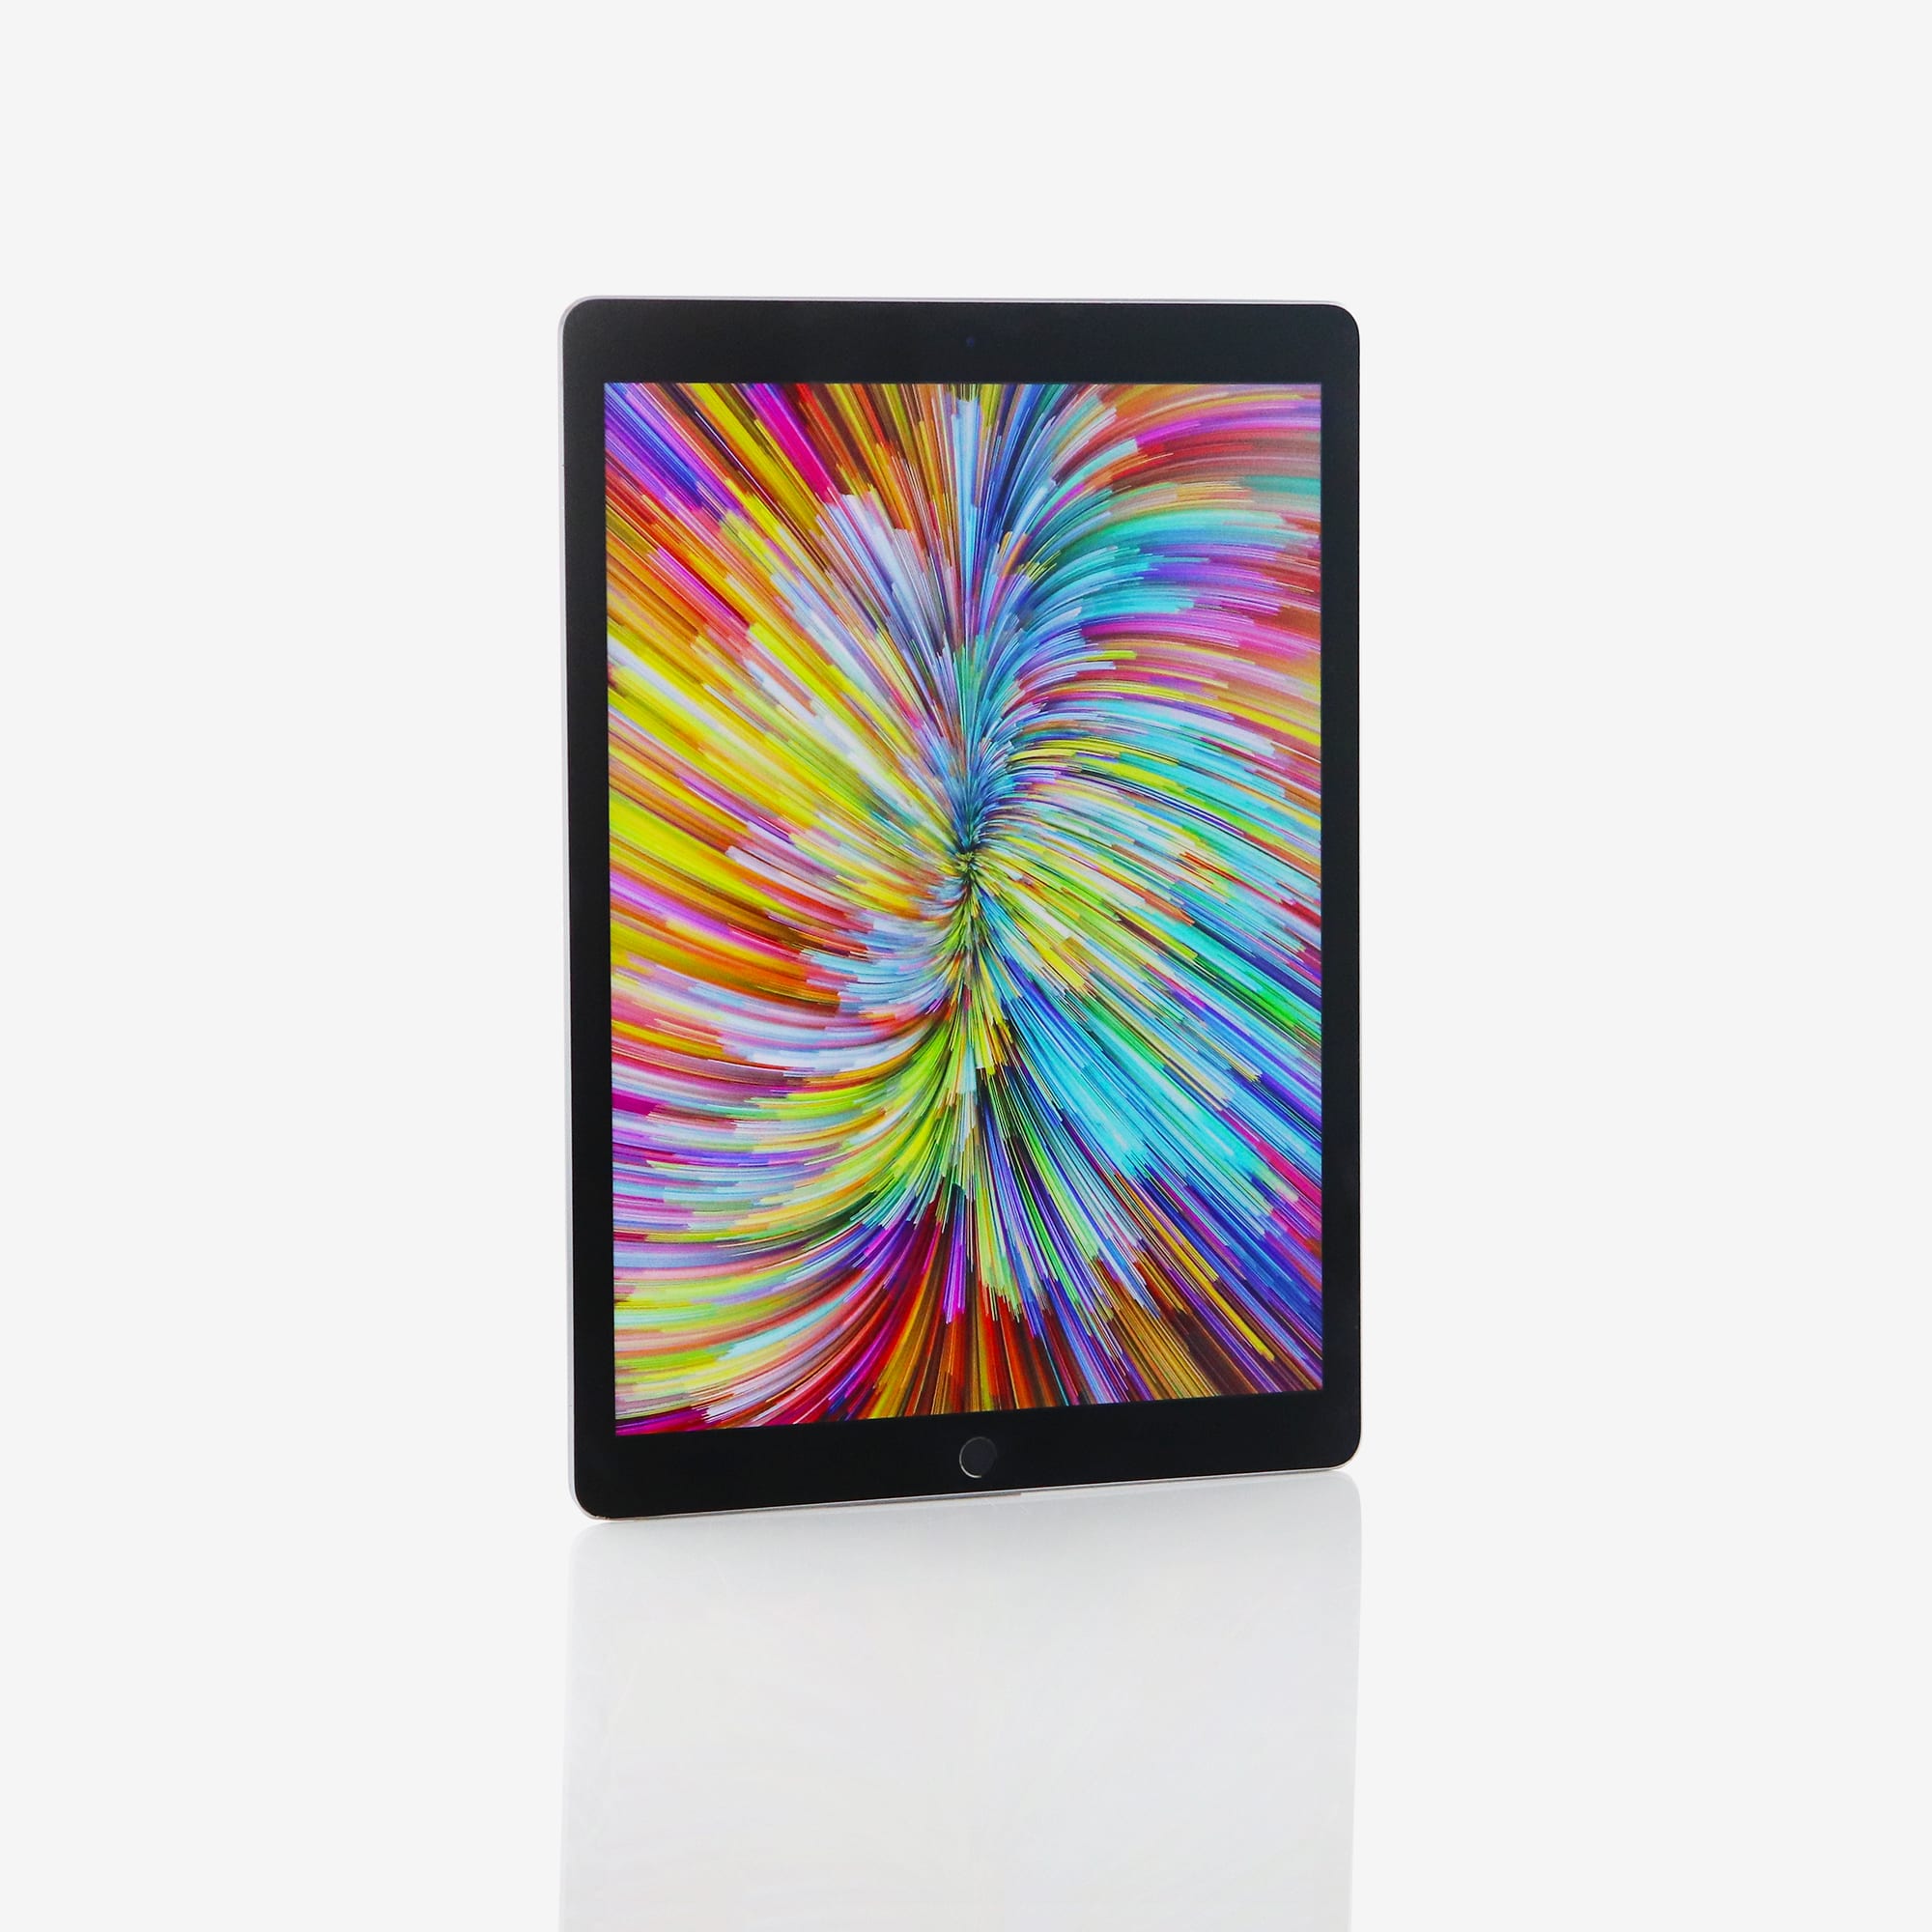 1 x iPad Pro (12.9-inch) (2nd generation) (Wi-Fi) Space Grey